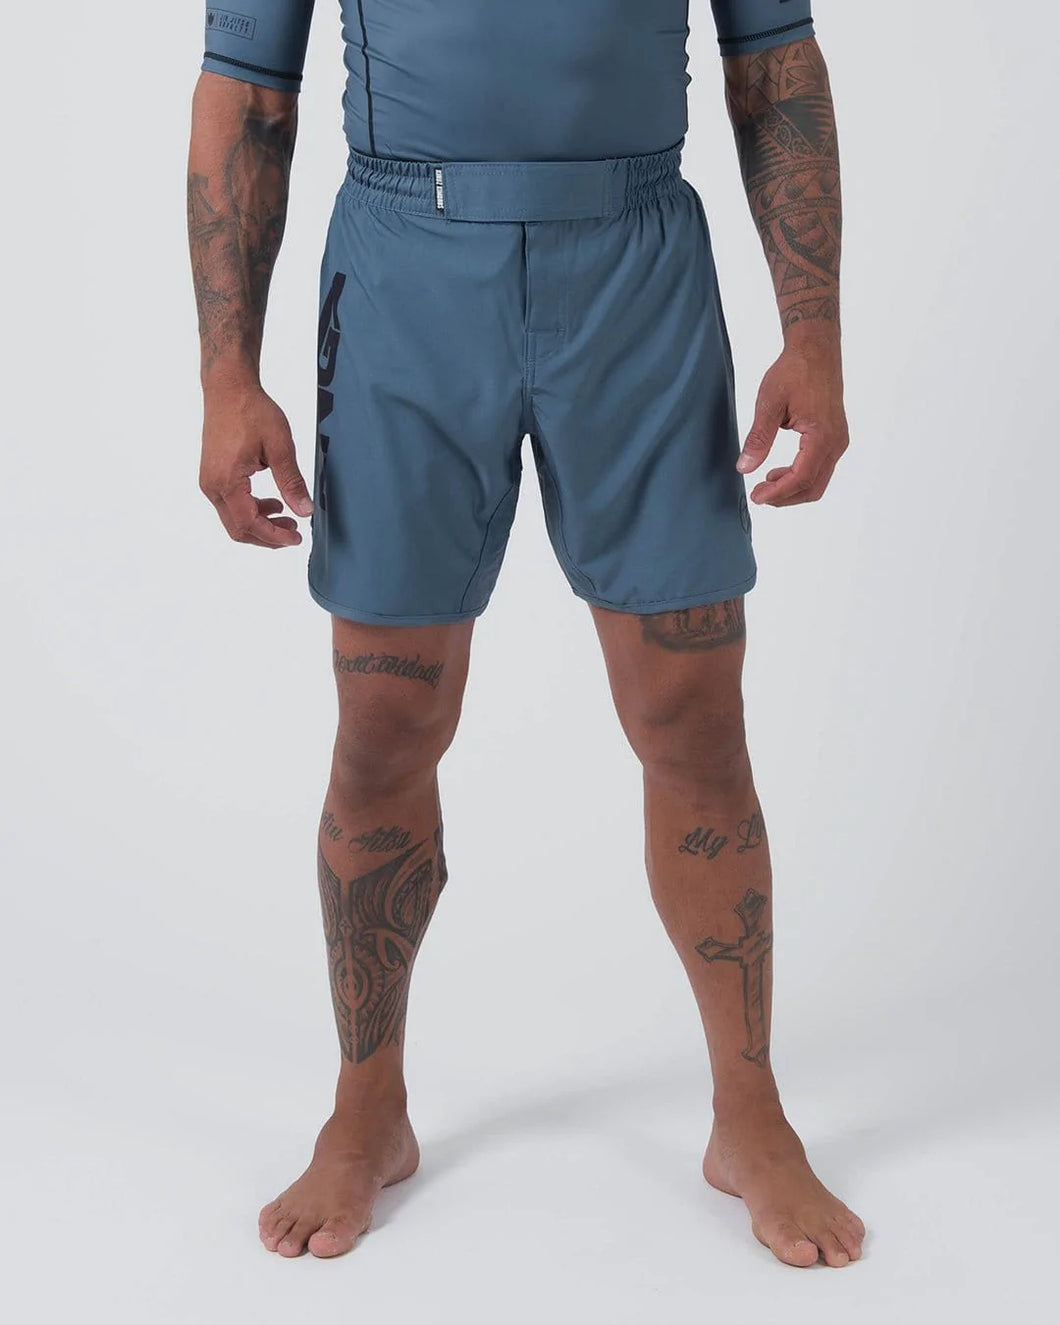 Kingzkore shorts v2- azul